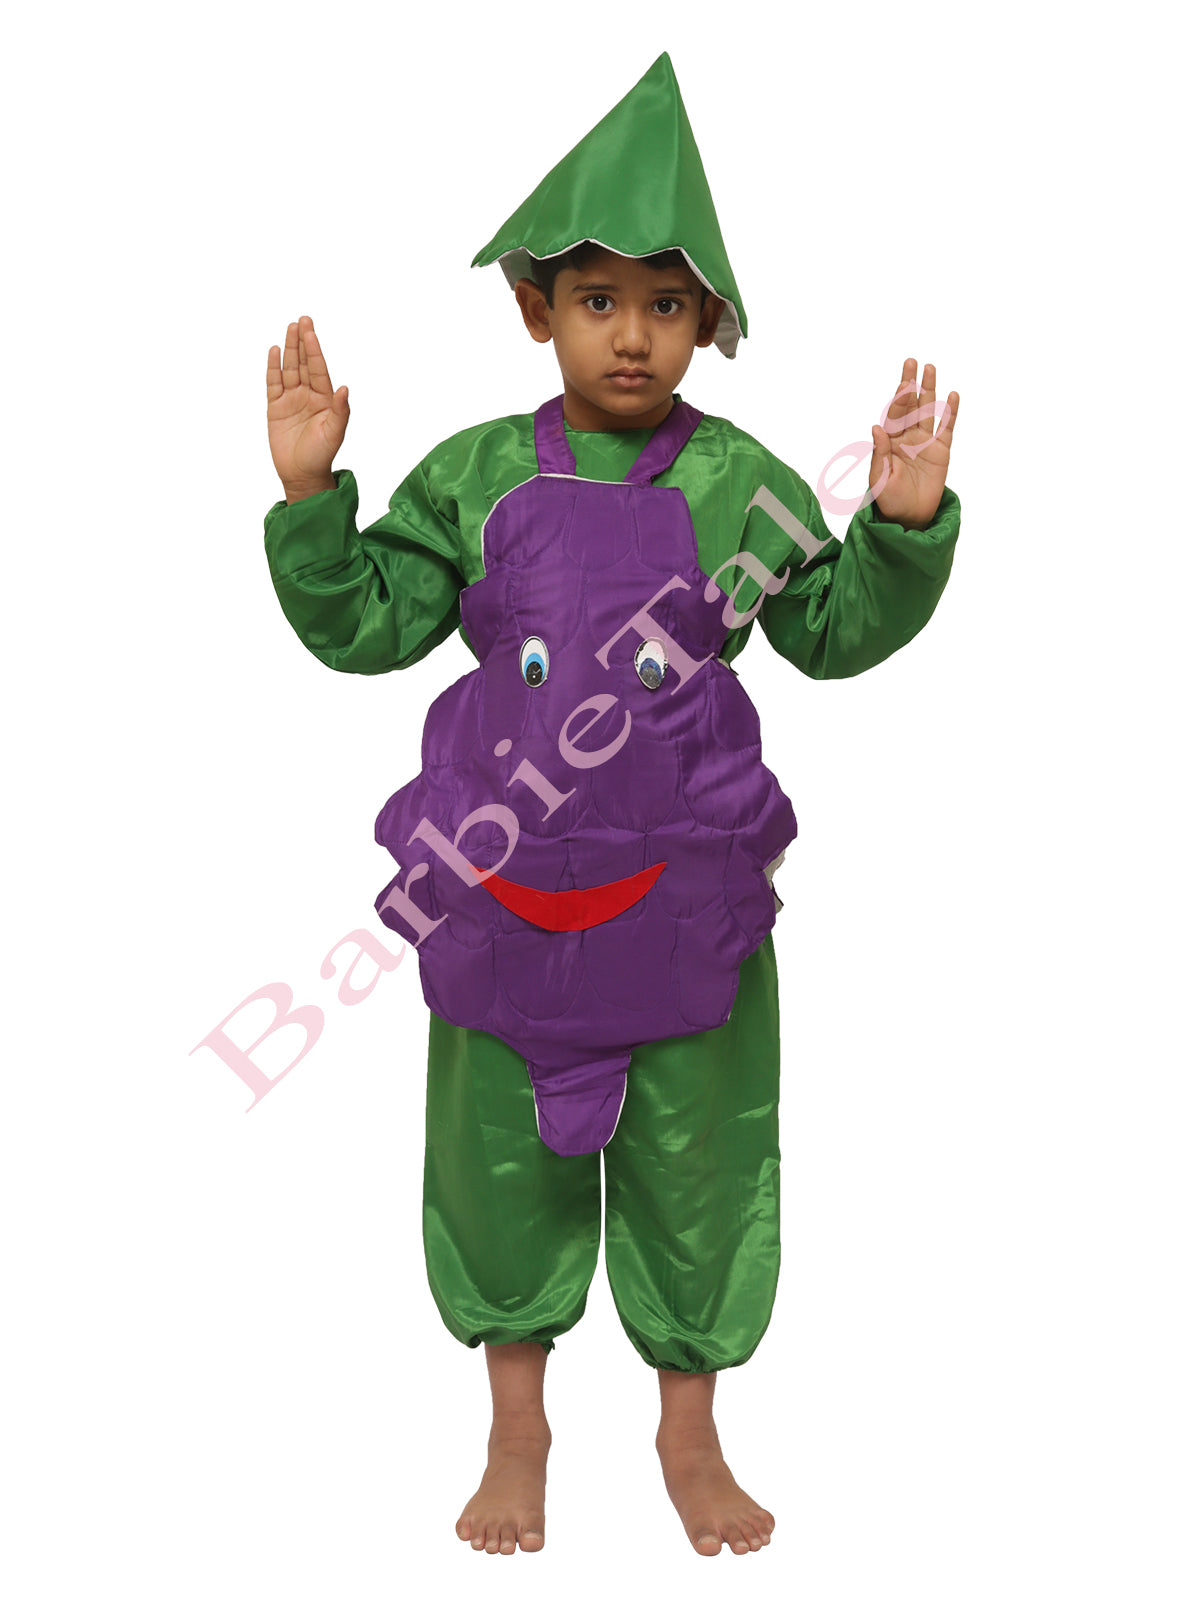 Homemade Grapes Costume | Easy DIY Costumes - Photo 2/2 | Grapes costume,  Kids costumes, Homemade costumes for kids